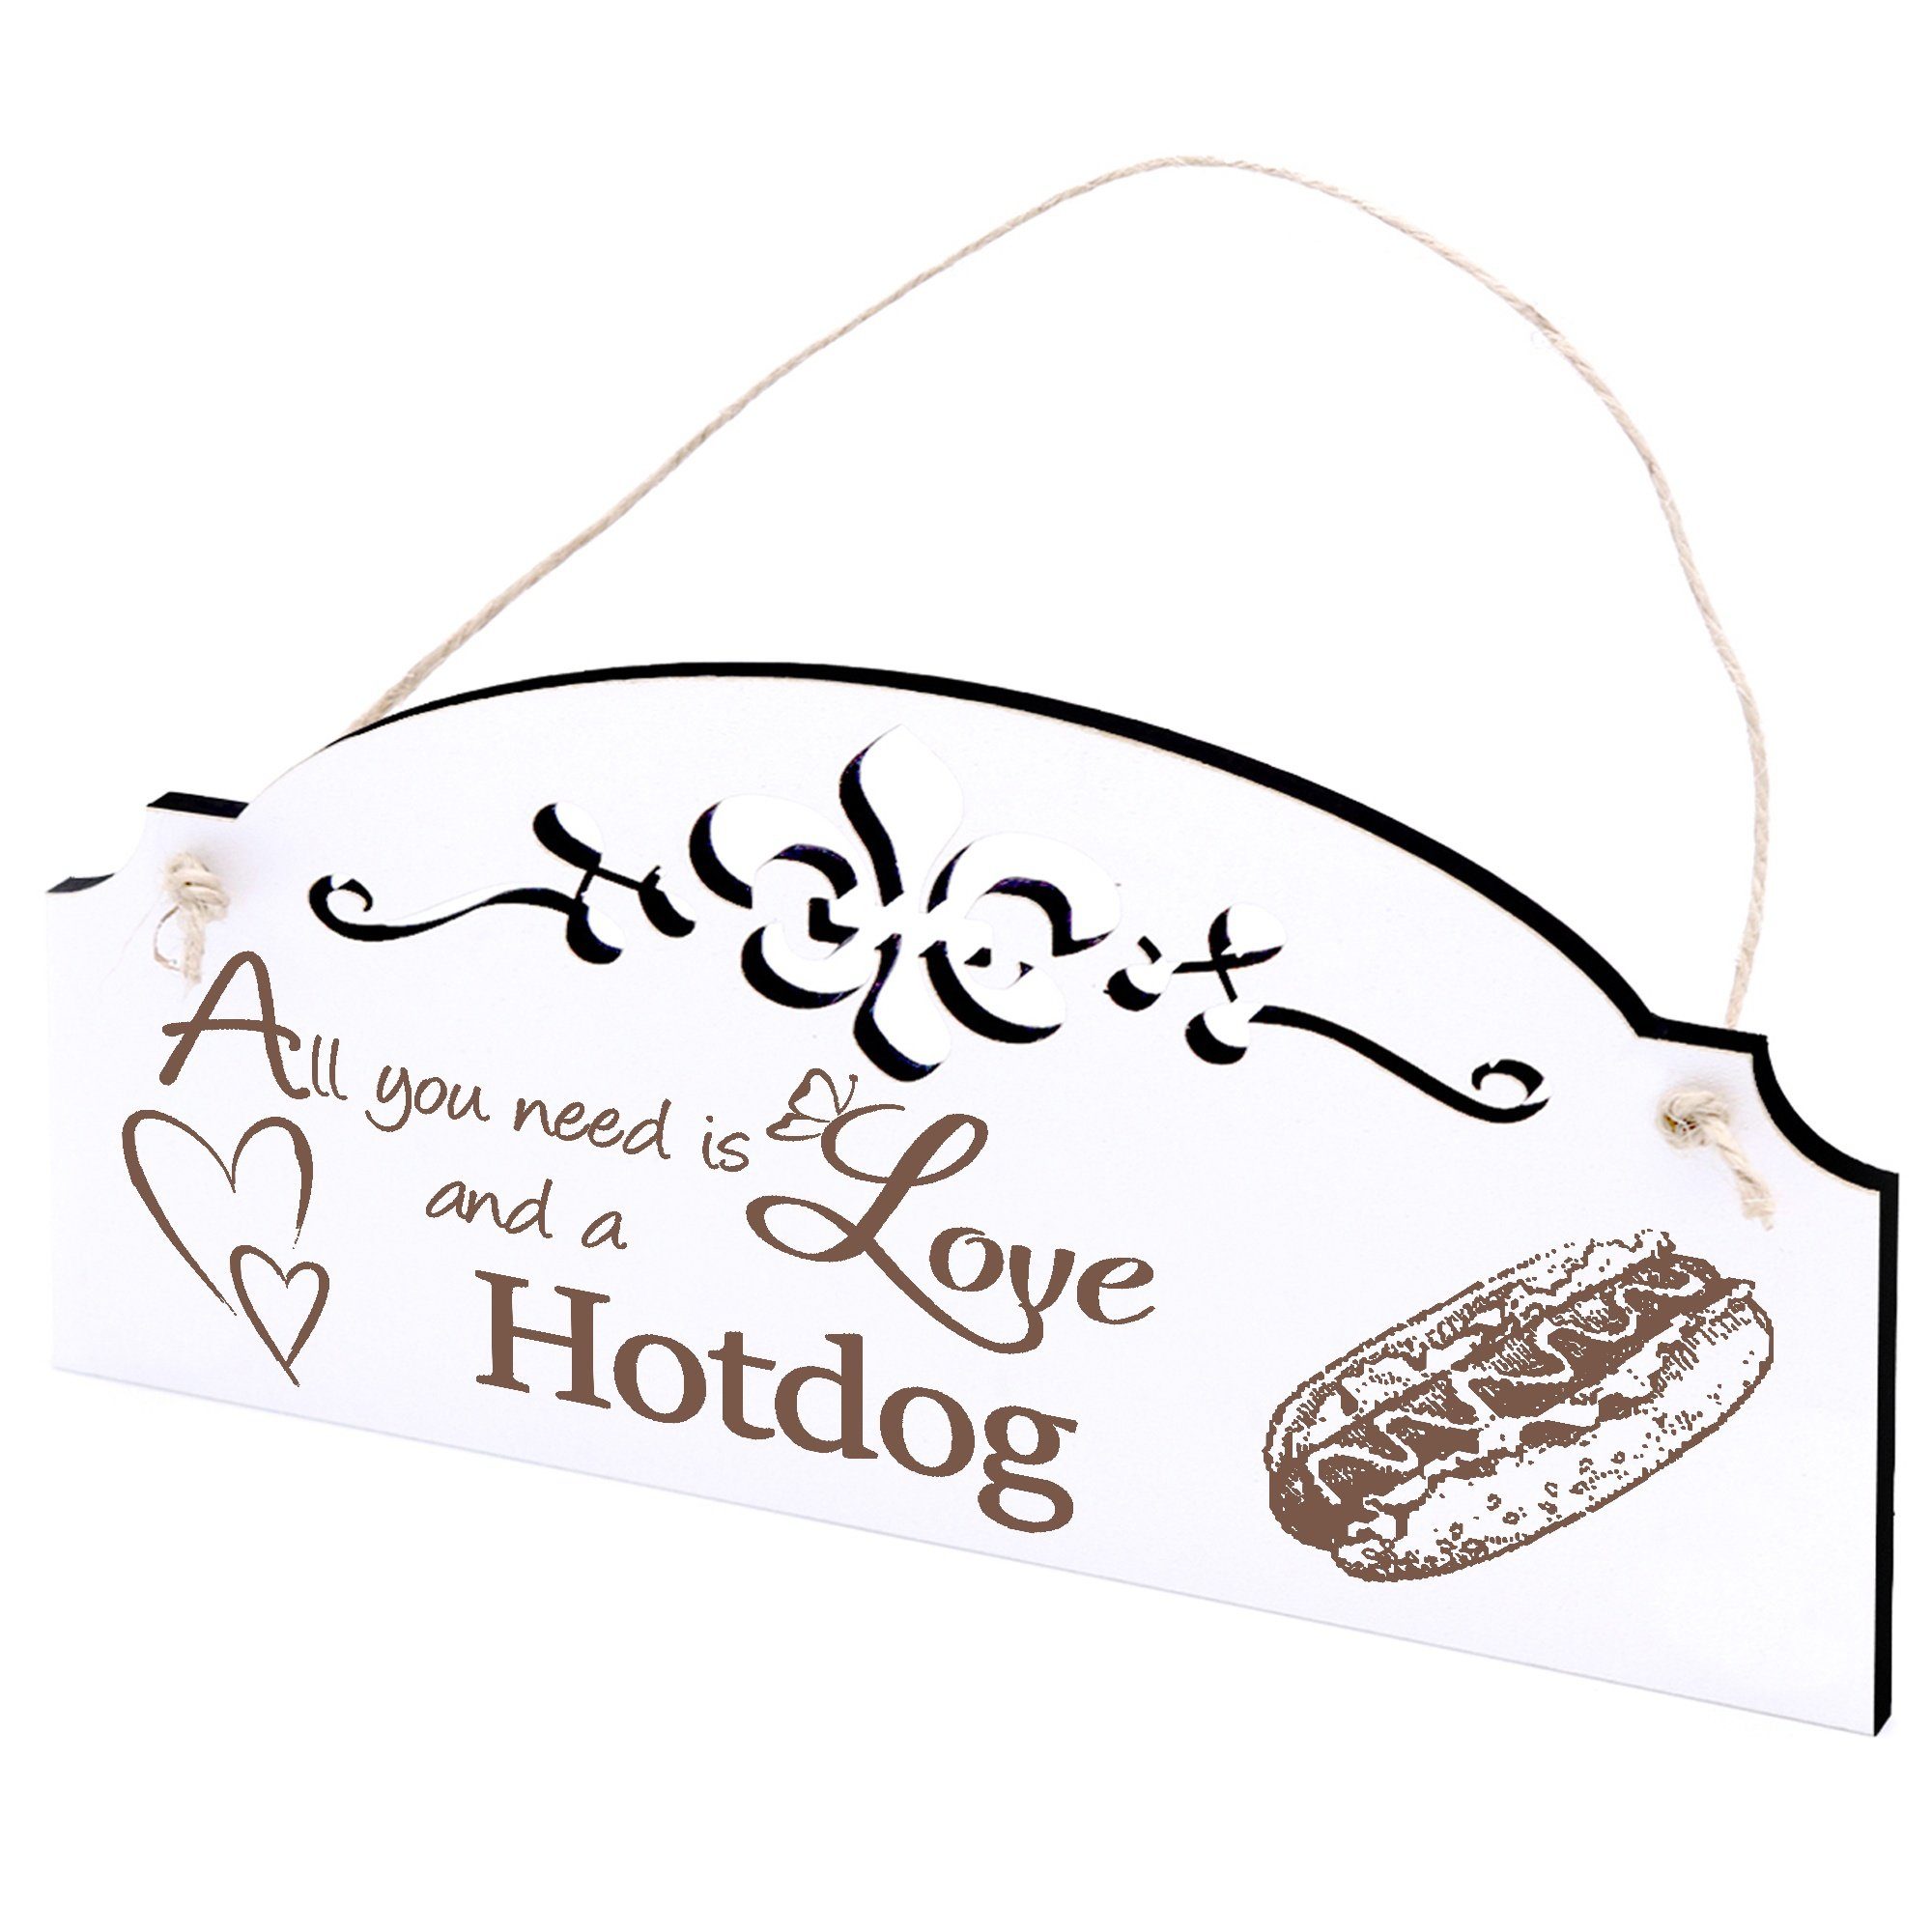 Deko Love need All Hotdog Dekolando Hängedekoration you is 20x10cm